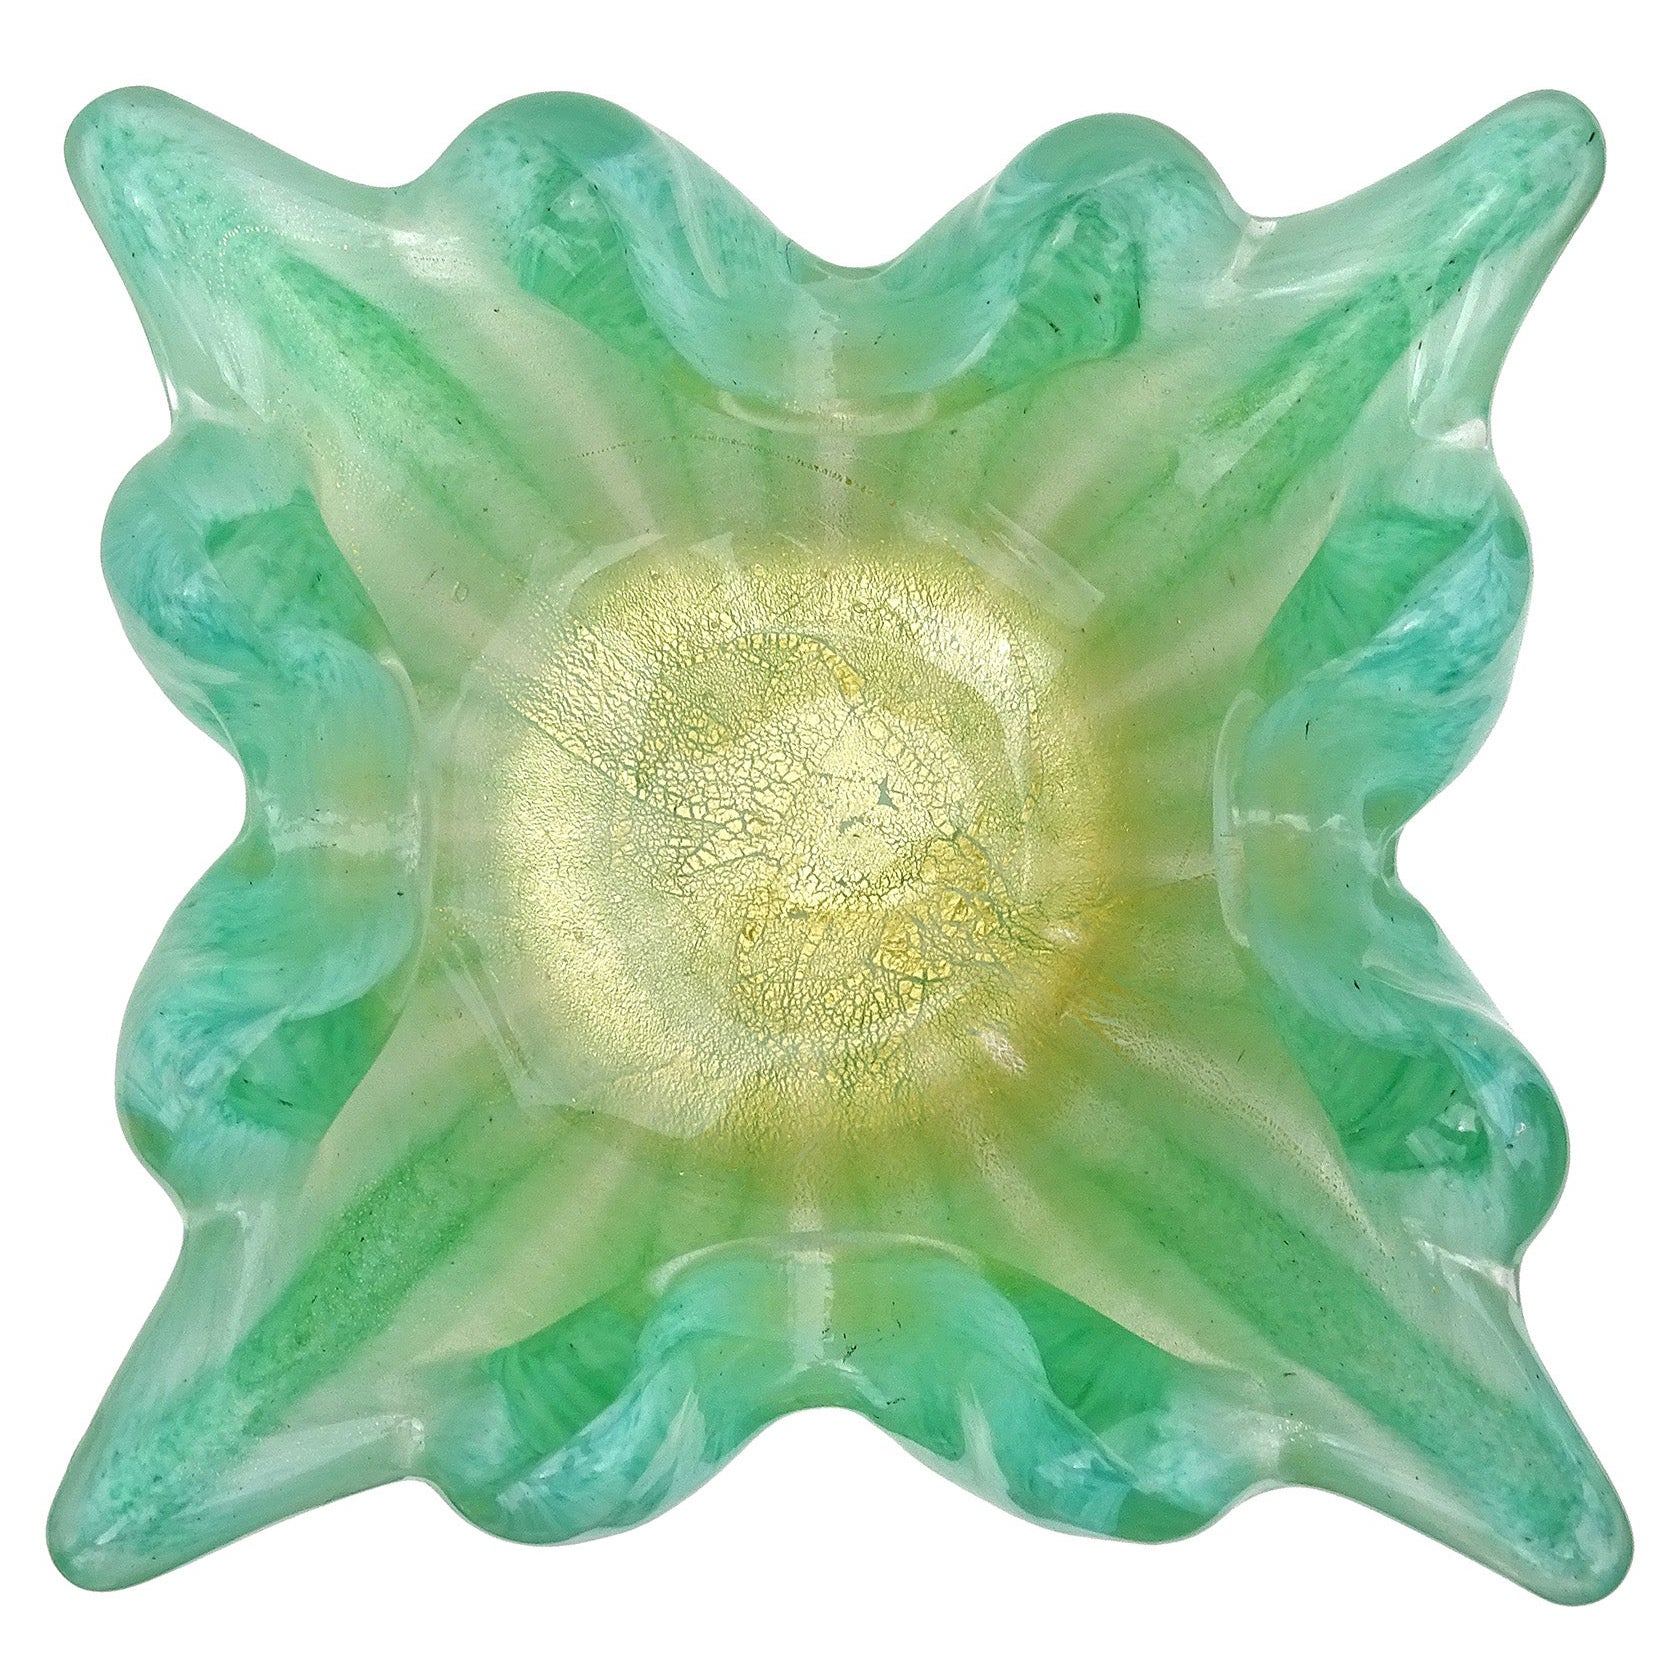 Barovier Toso Murano Jade Green Gold Flecks Italian Art Glass Spike Bowl Ashtray